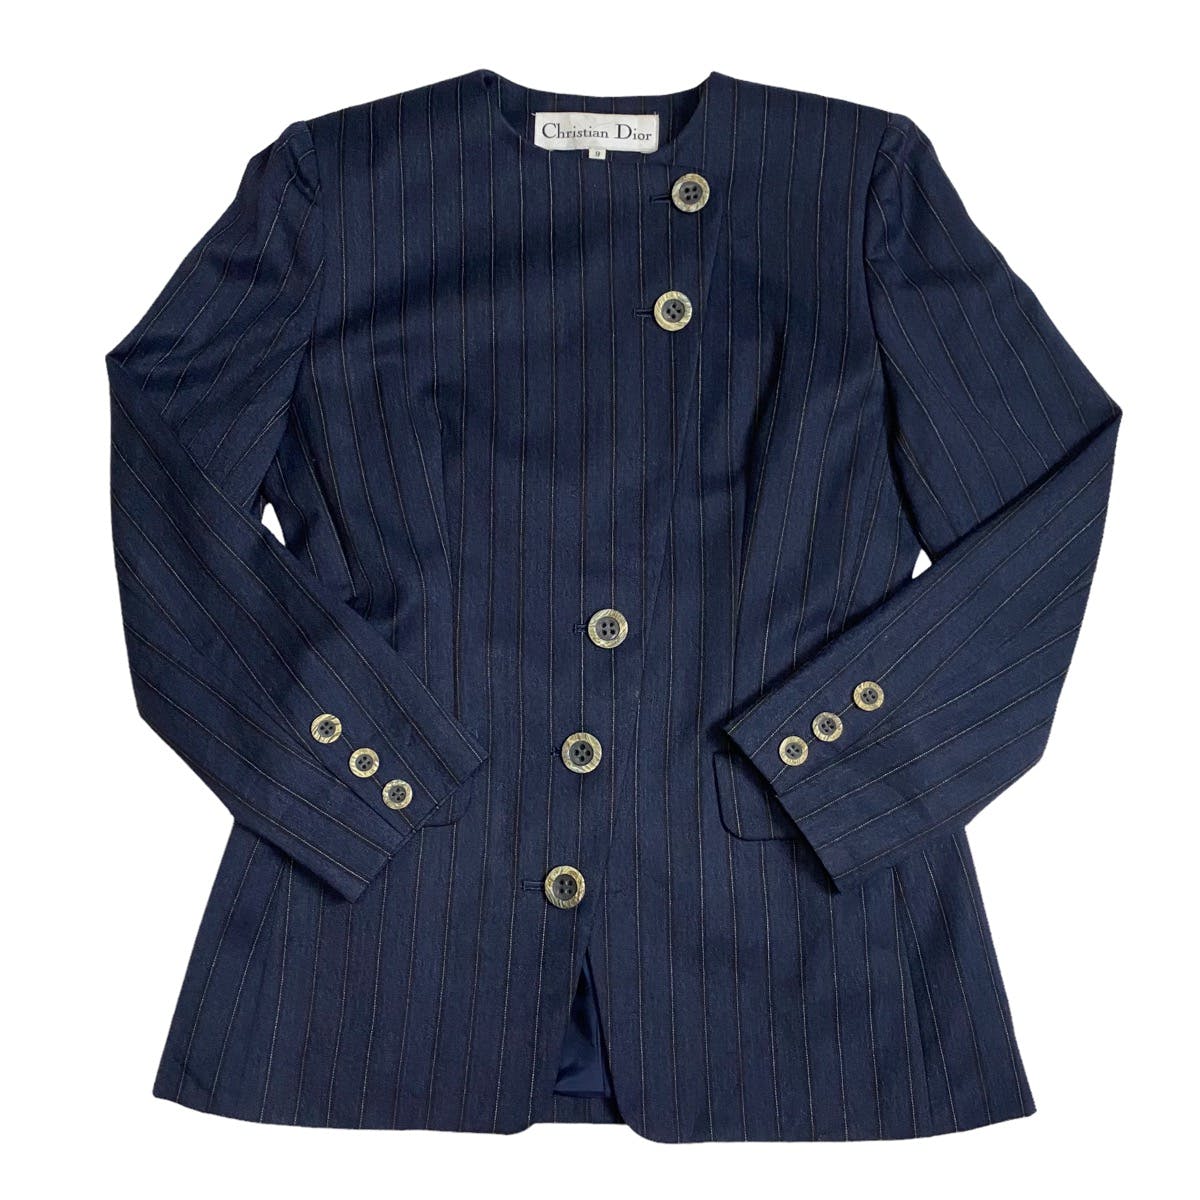 Christian Dior Monsieur - Christian Dior Single-Breasted Coat slant button Jacket - 5